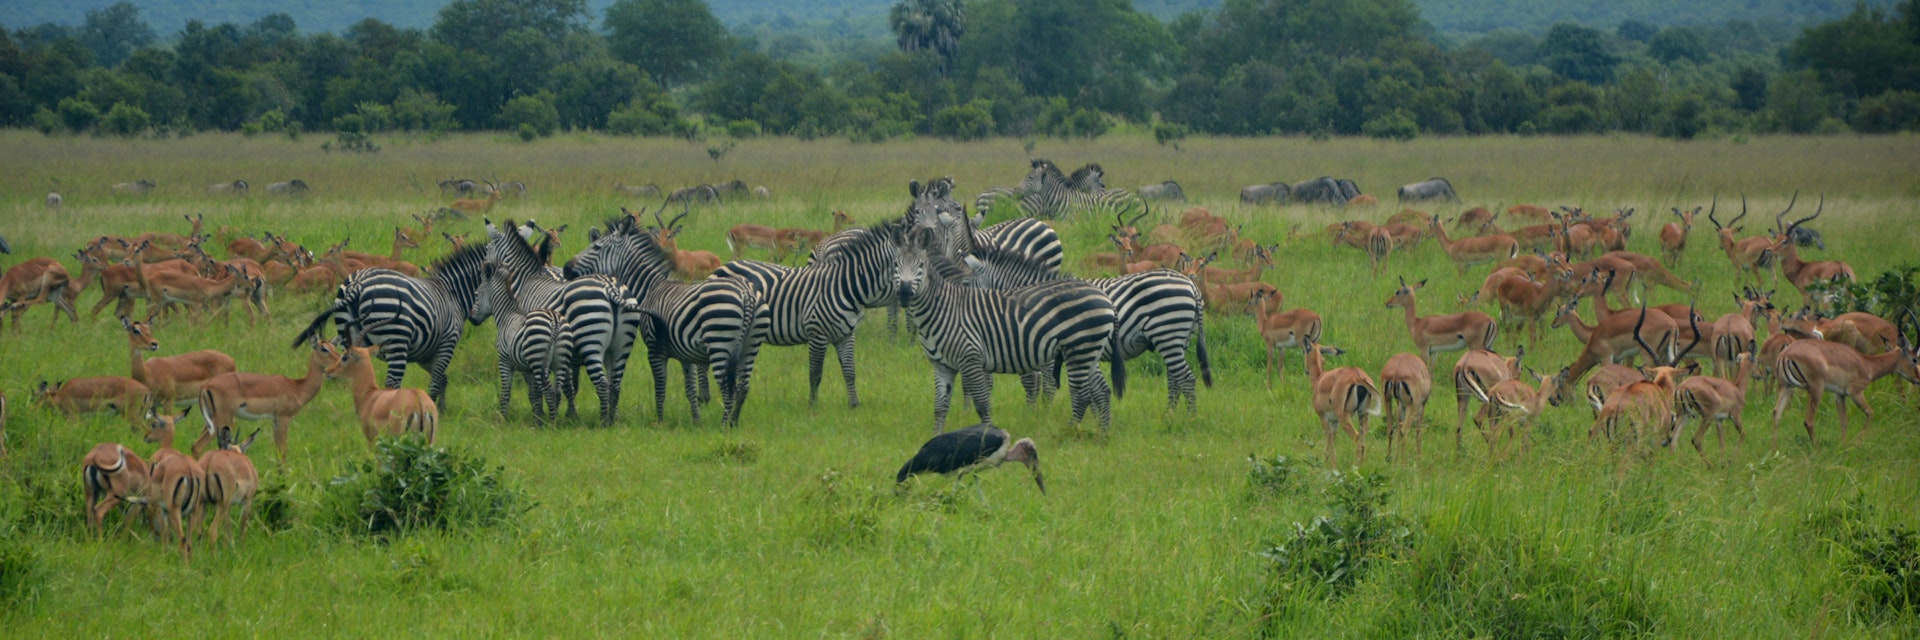 Impalas, zebras and a marabou in Mikumi National Park, Tanzania.